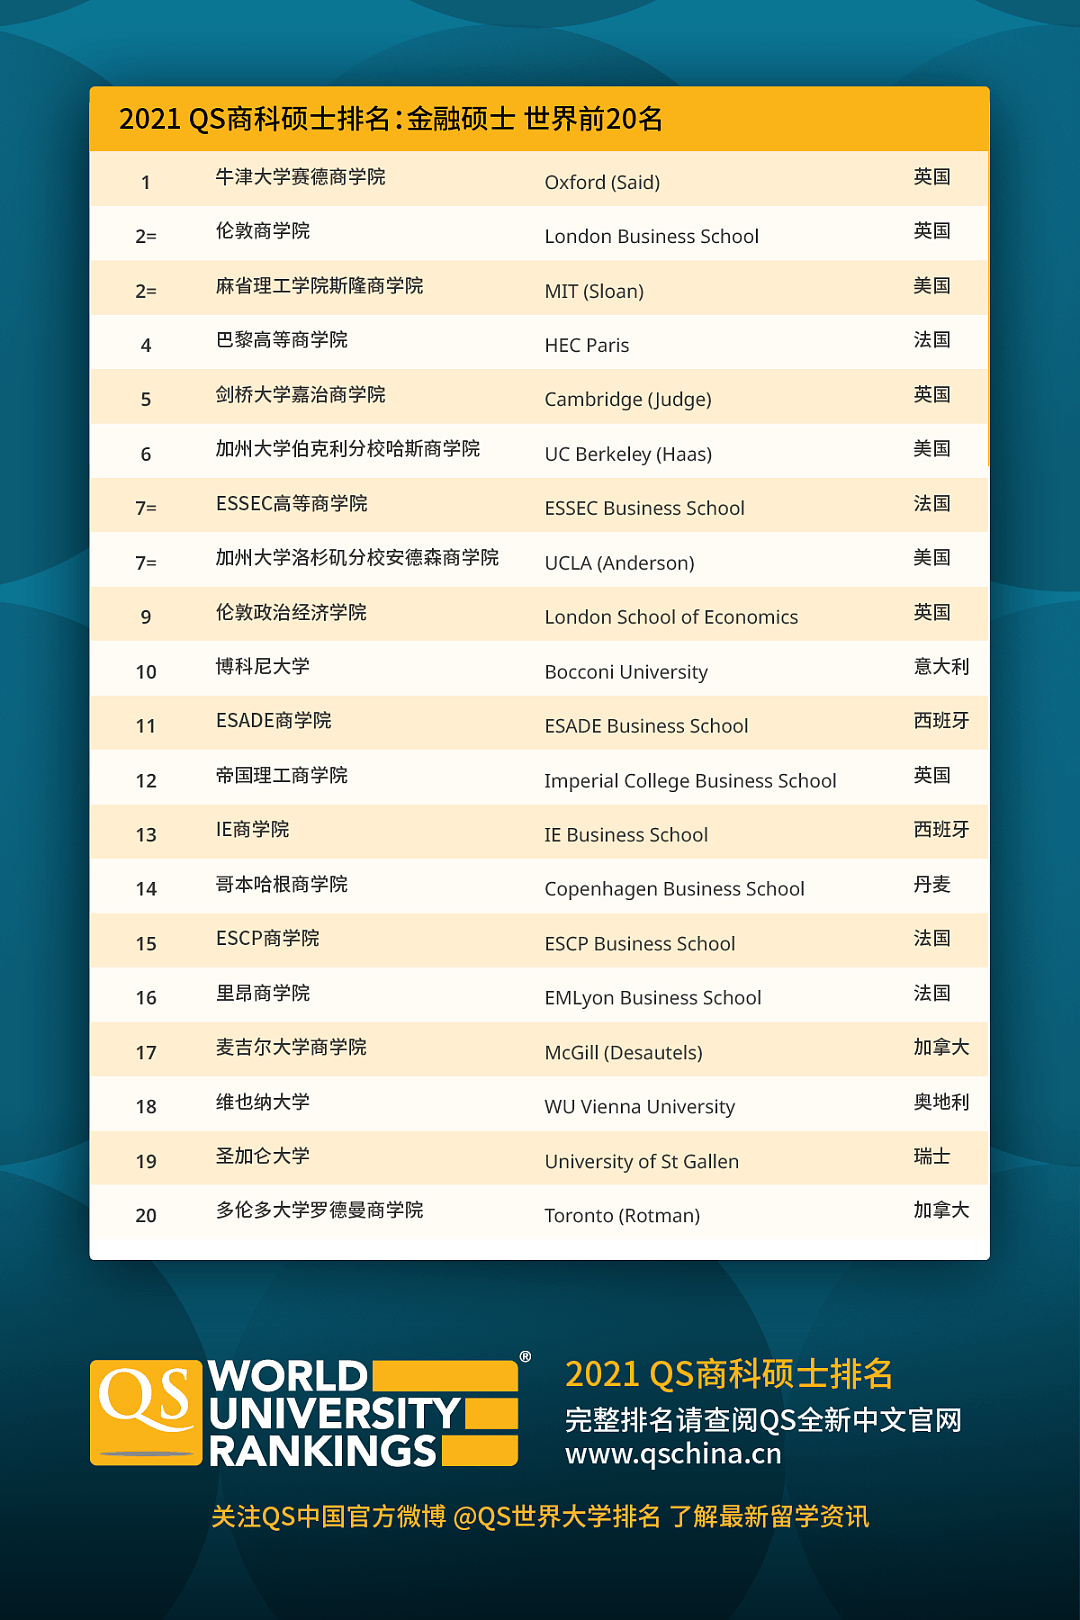 2021QS全球商科硕士院校排名发布！澳洲多所高校榜上有名（组图） - 3